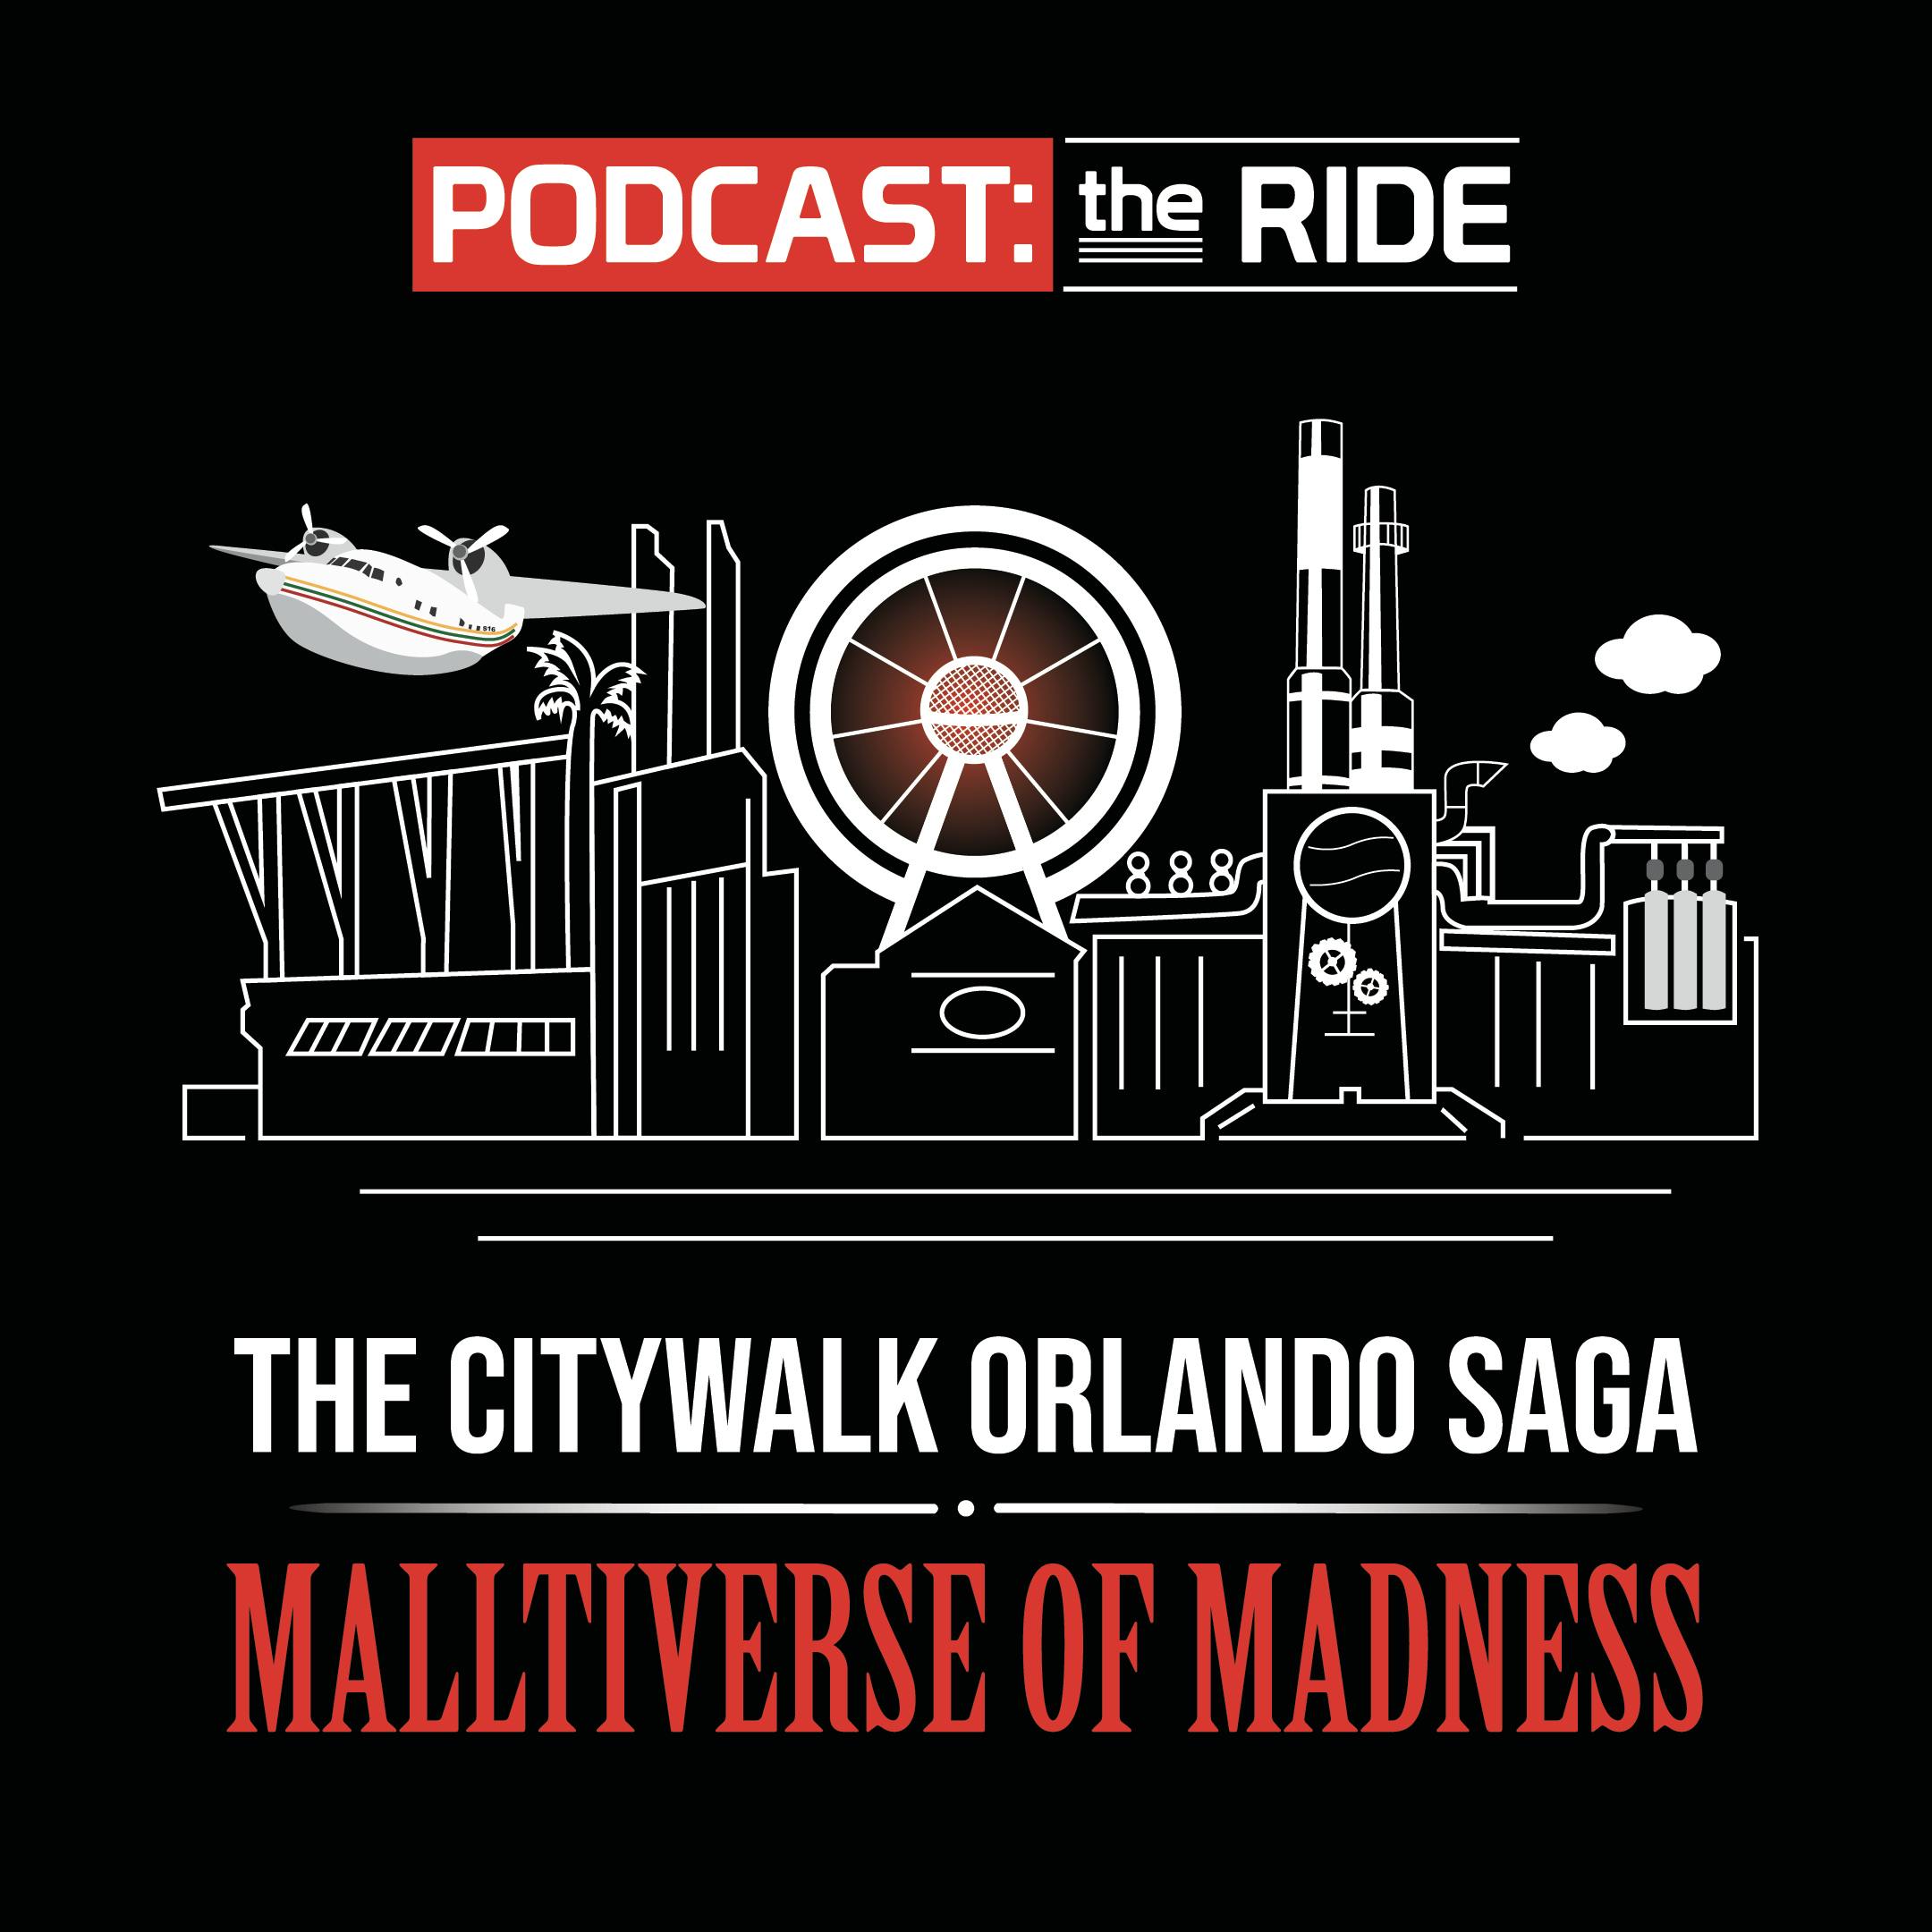 The CityWalk Orlando Saga: Malltiverse of Madness 3 - 1 with Julia Prescott